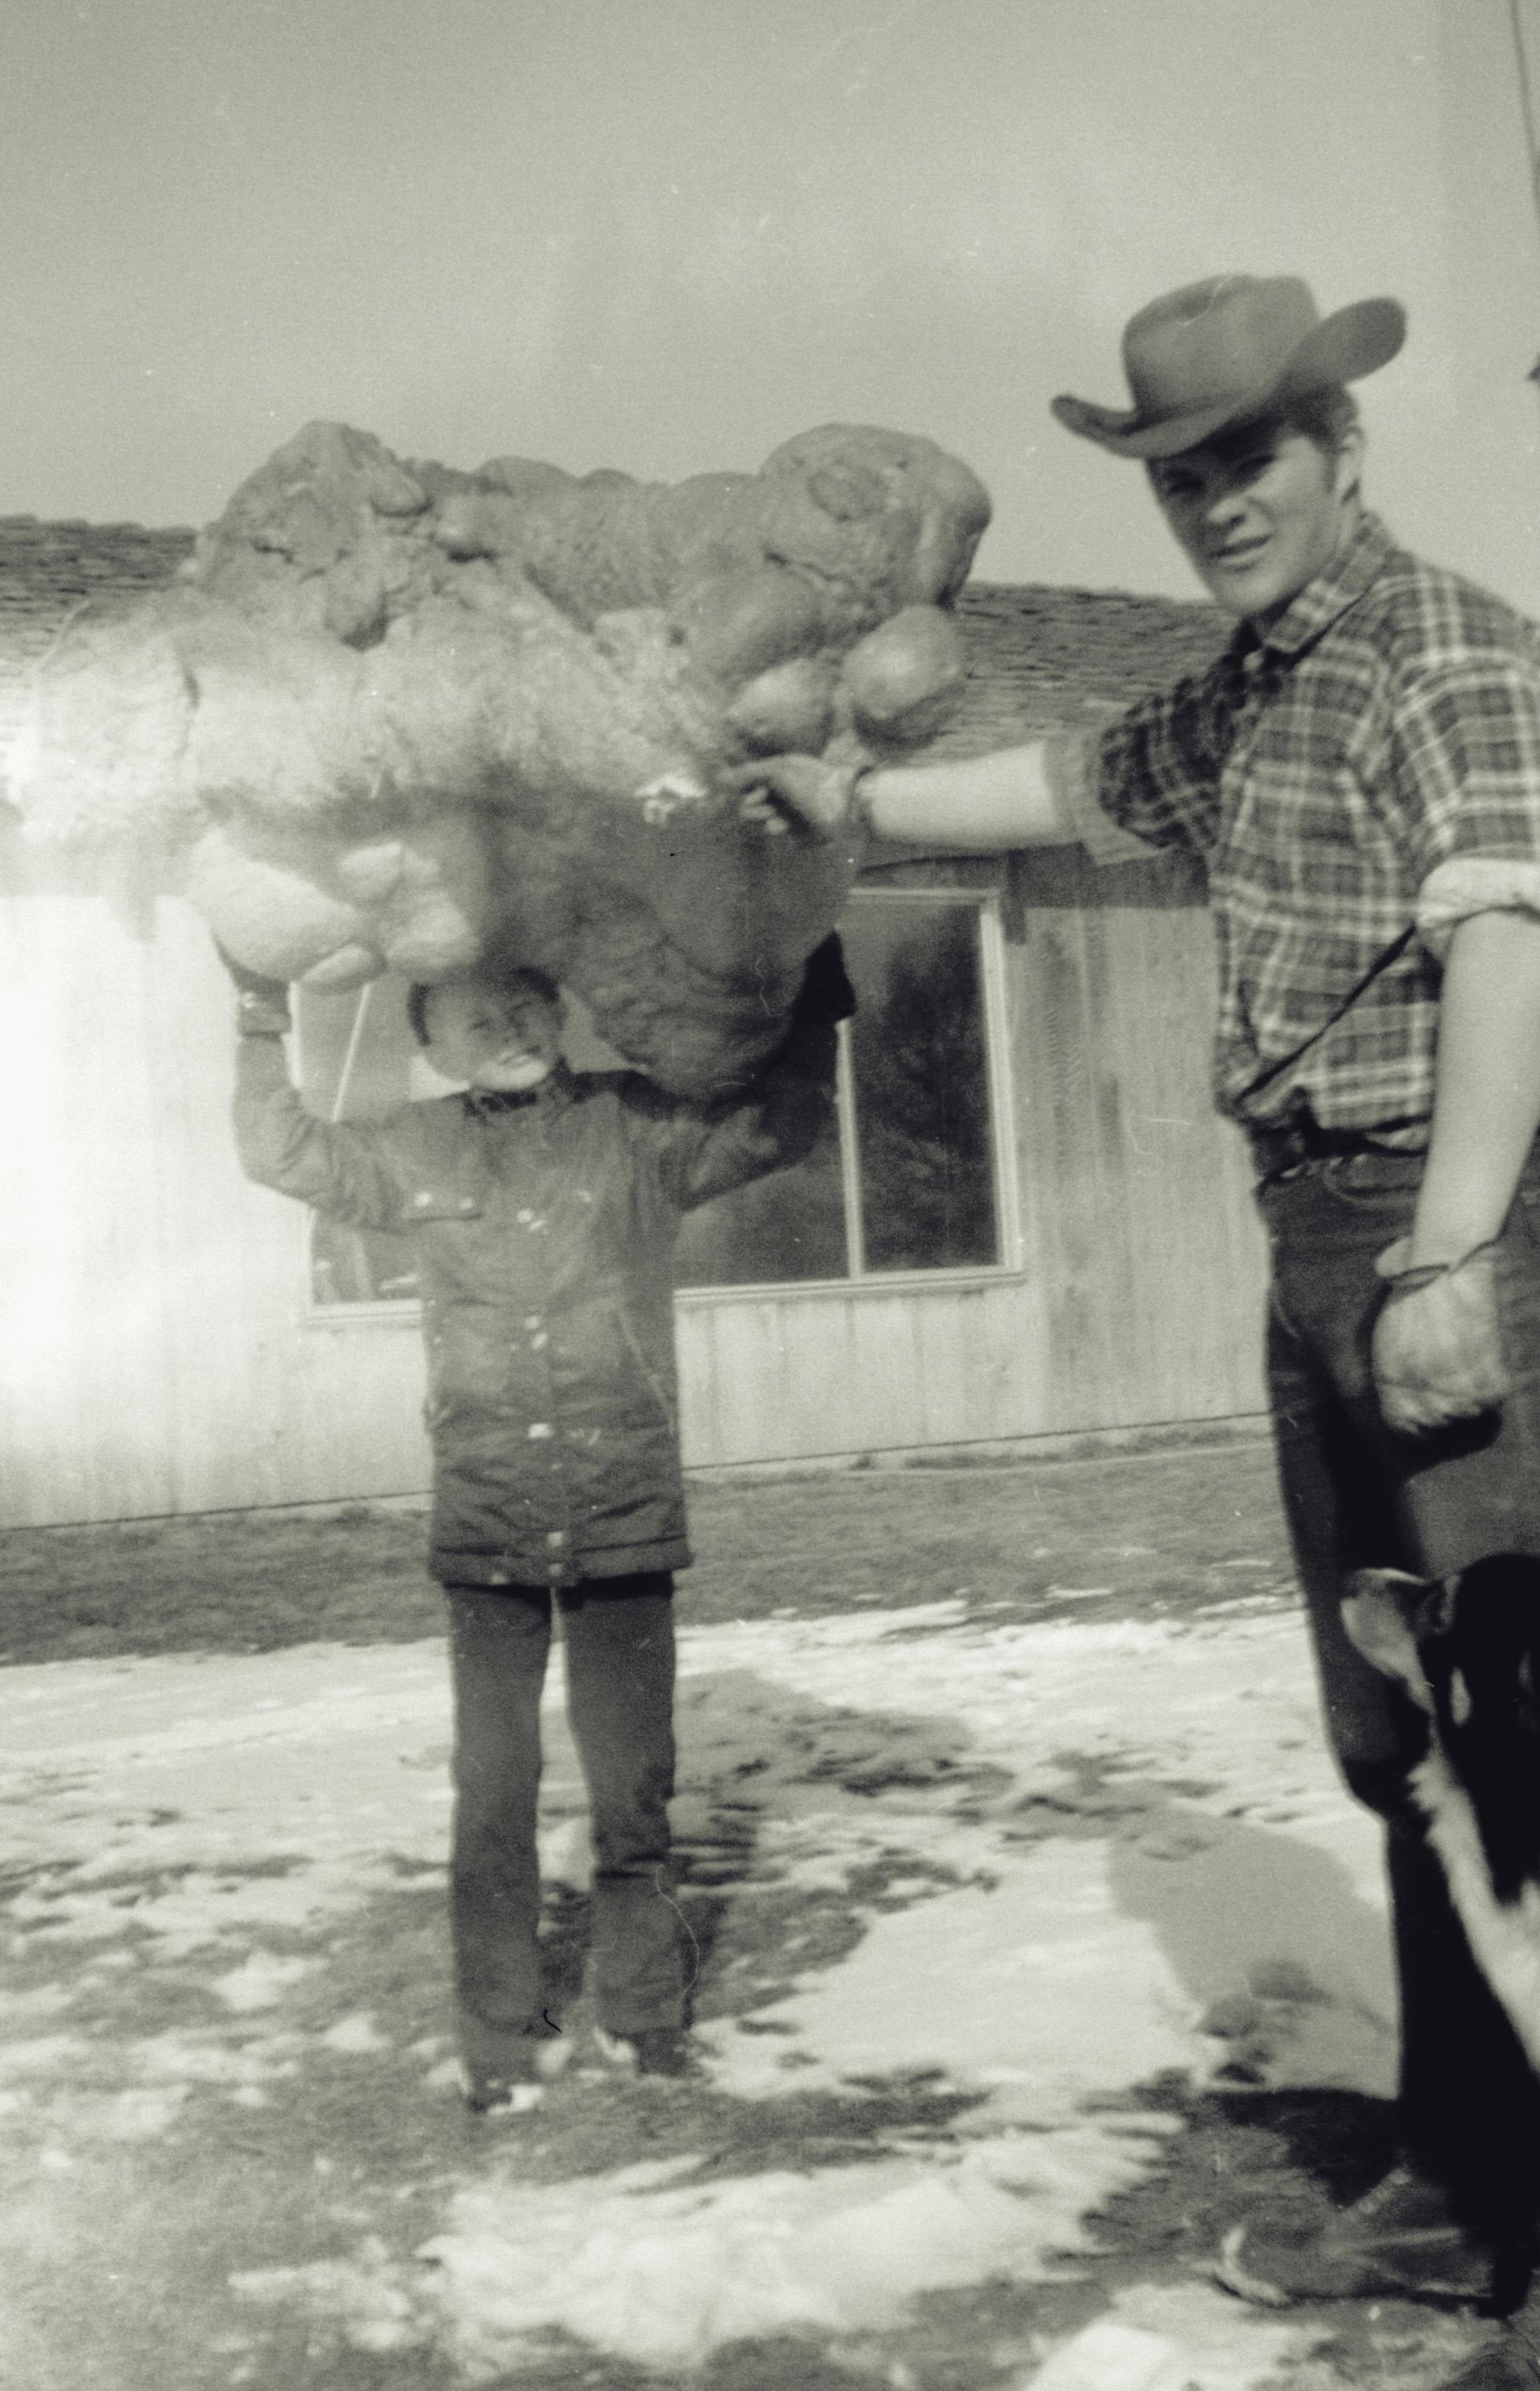 Boy holding a polyurethane "boulder"